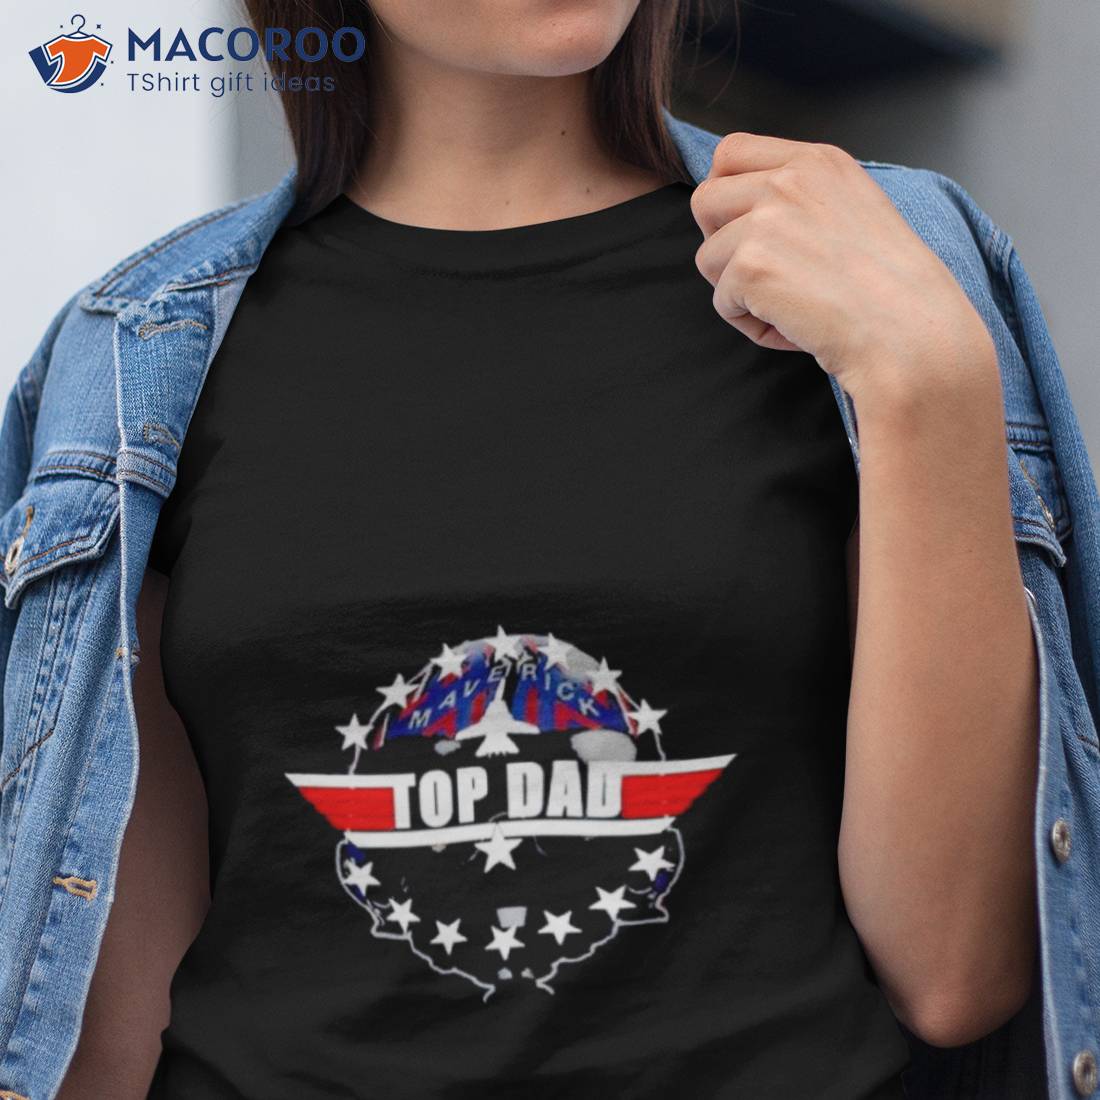 Top Gun Maverick Gift For Fan T-Shirt